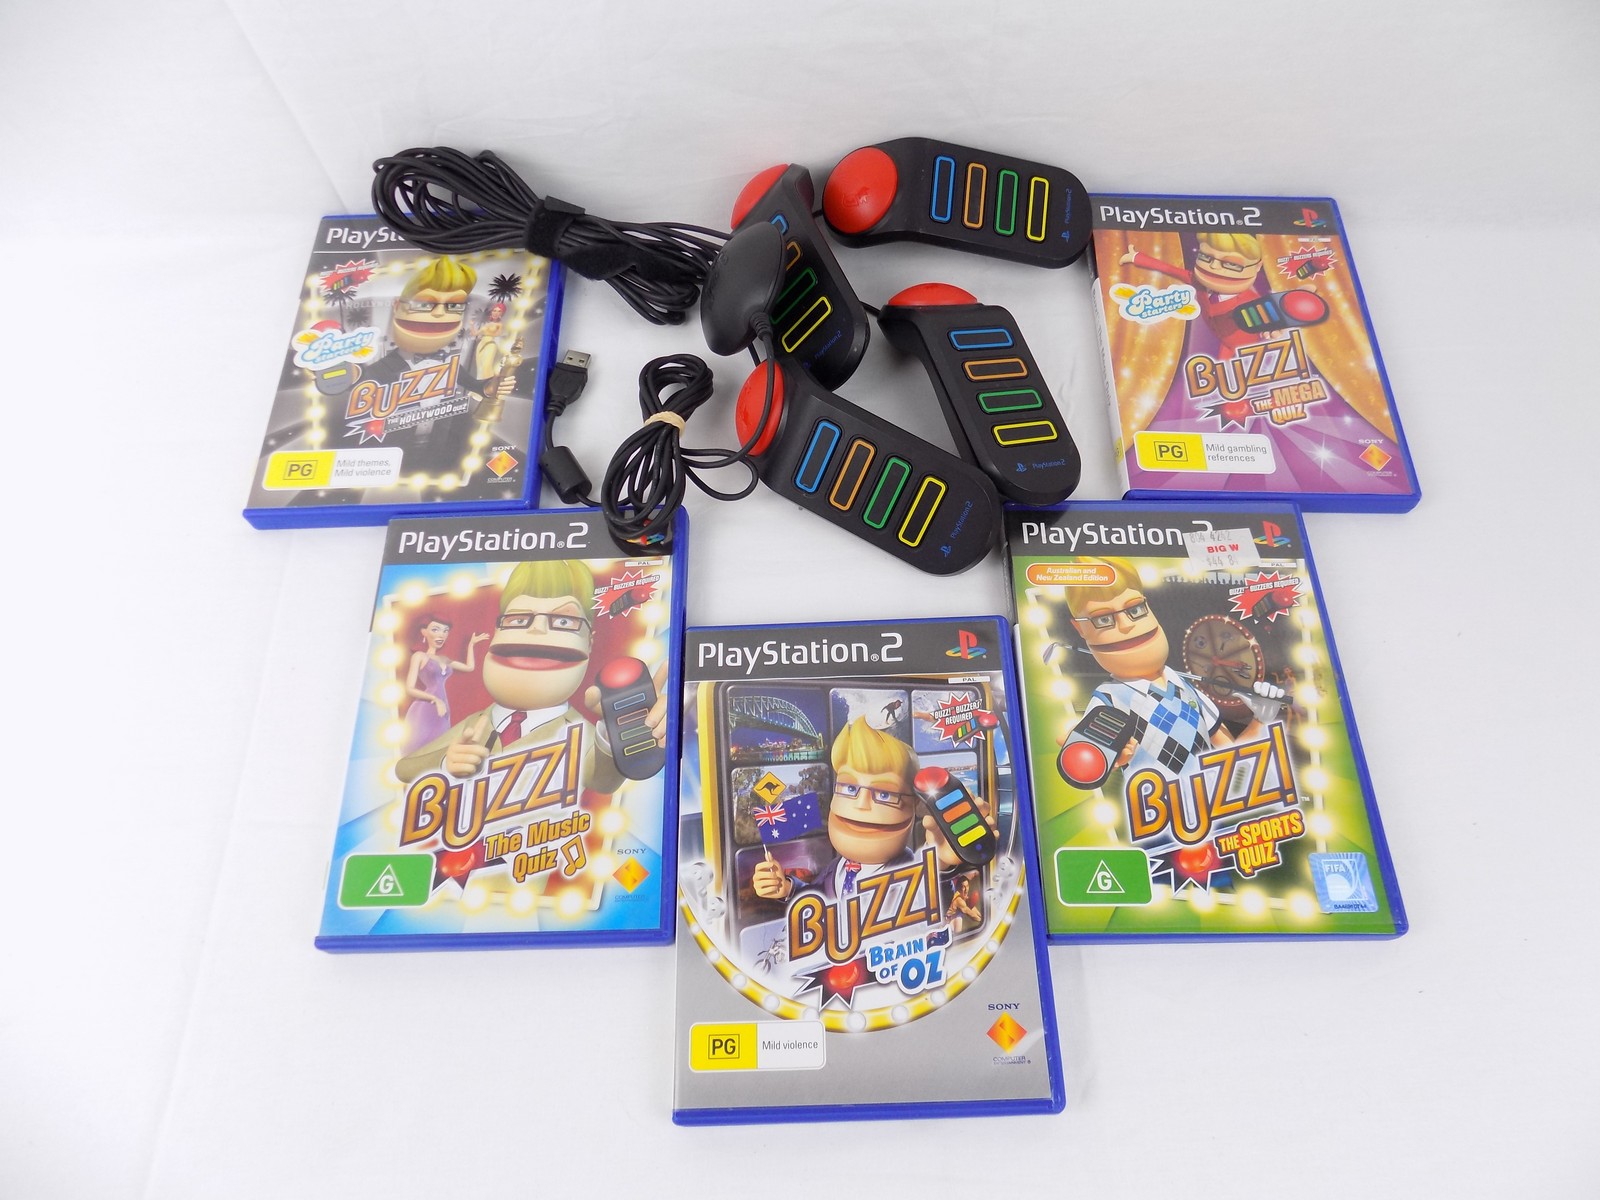  BUZZ: The Mega Quiz Bundle - PlayStation 2 : Video Games